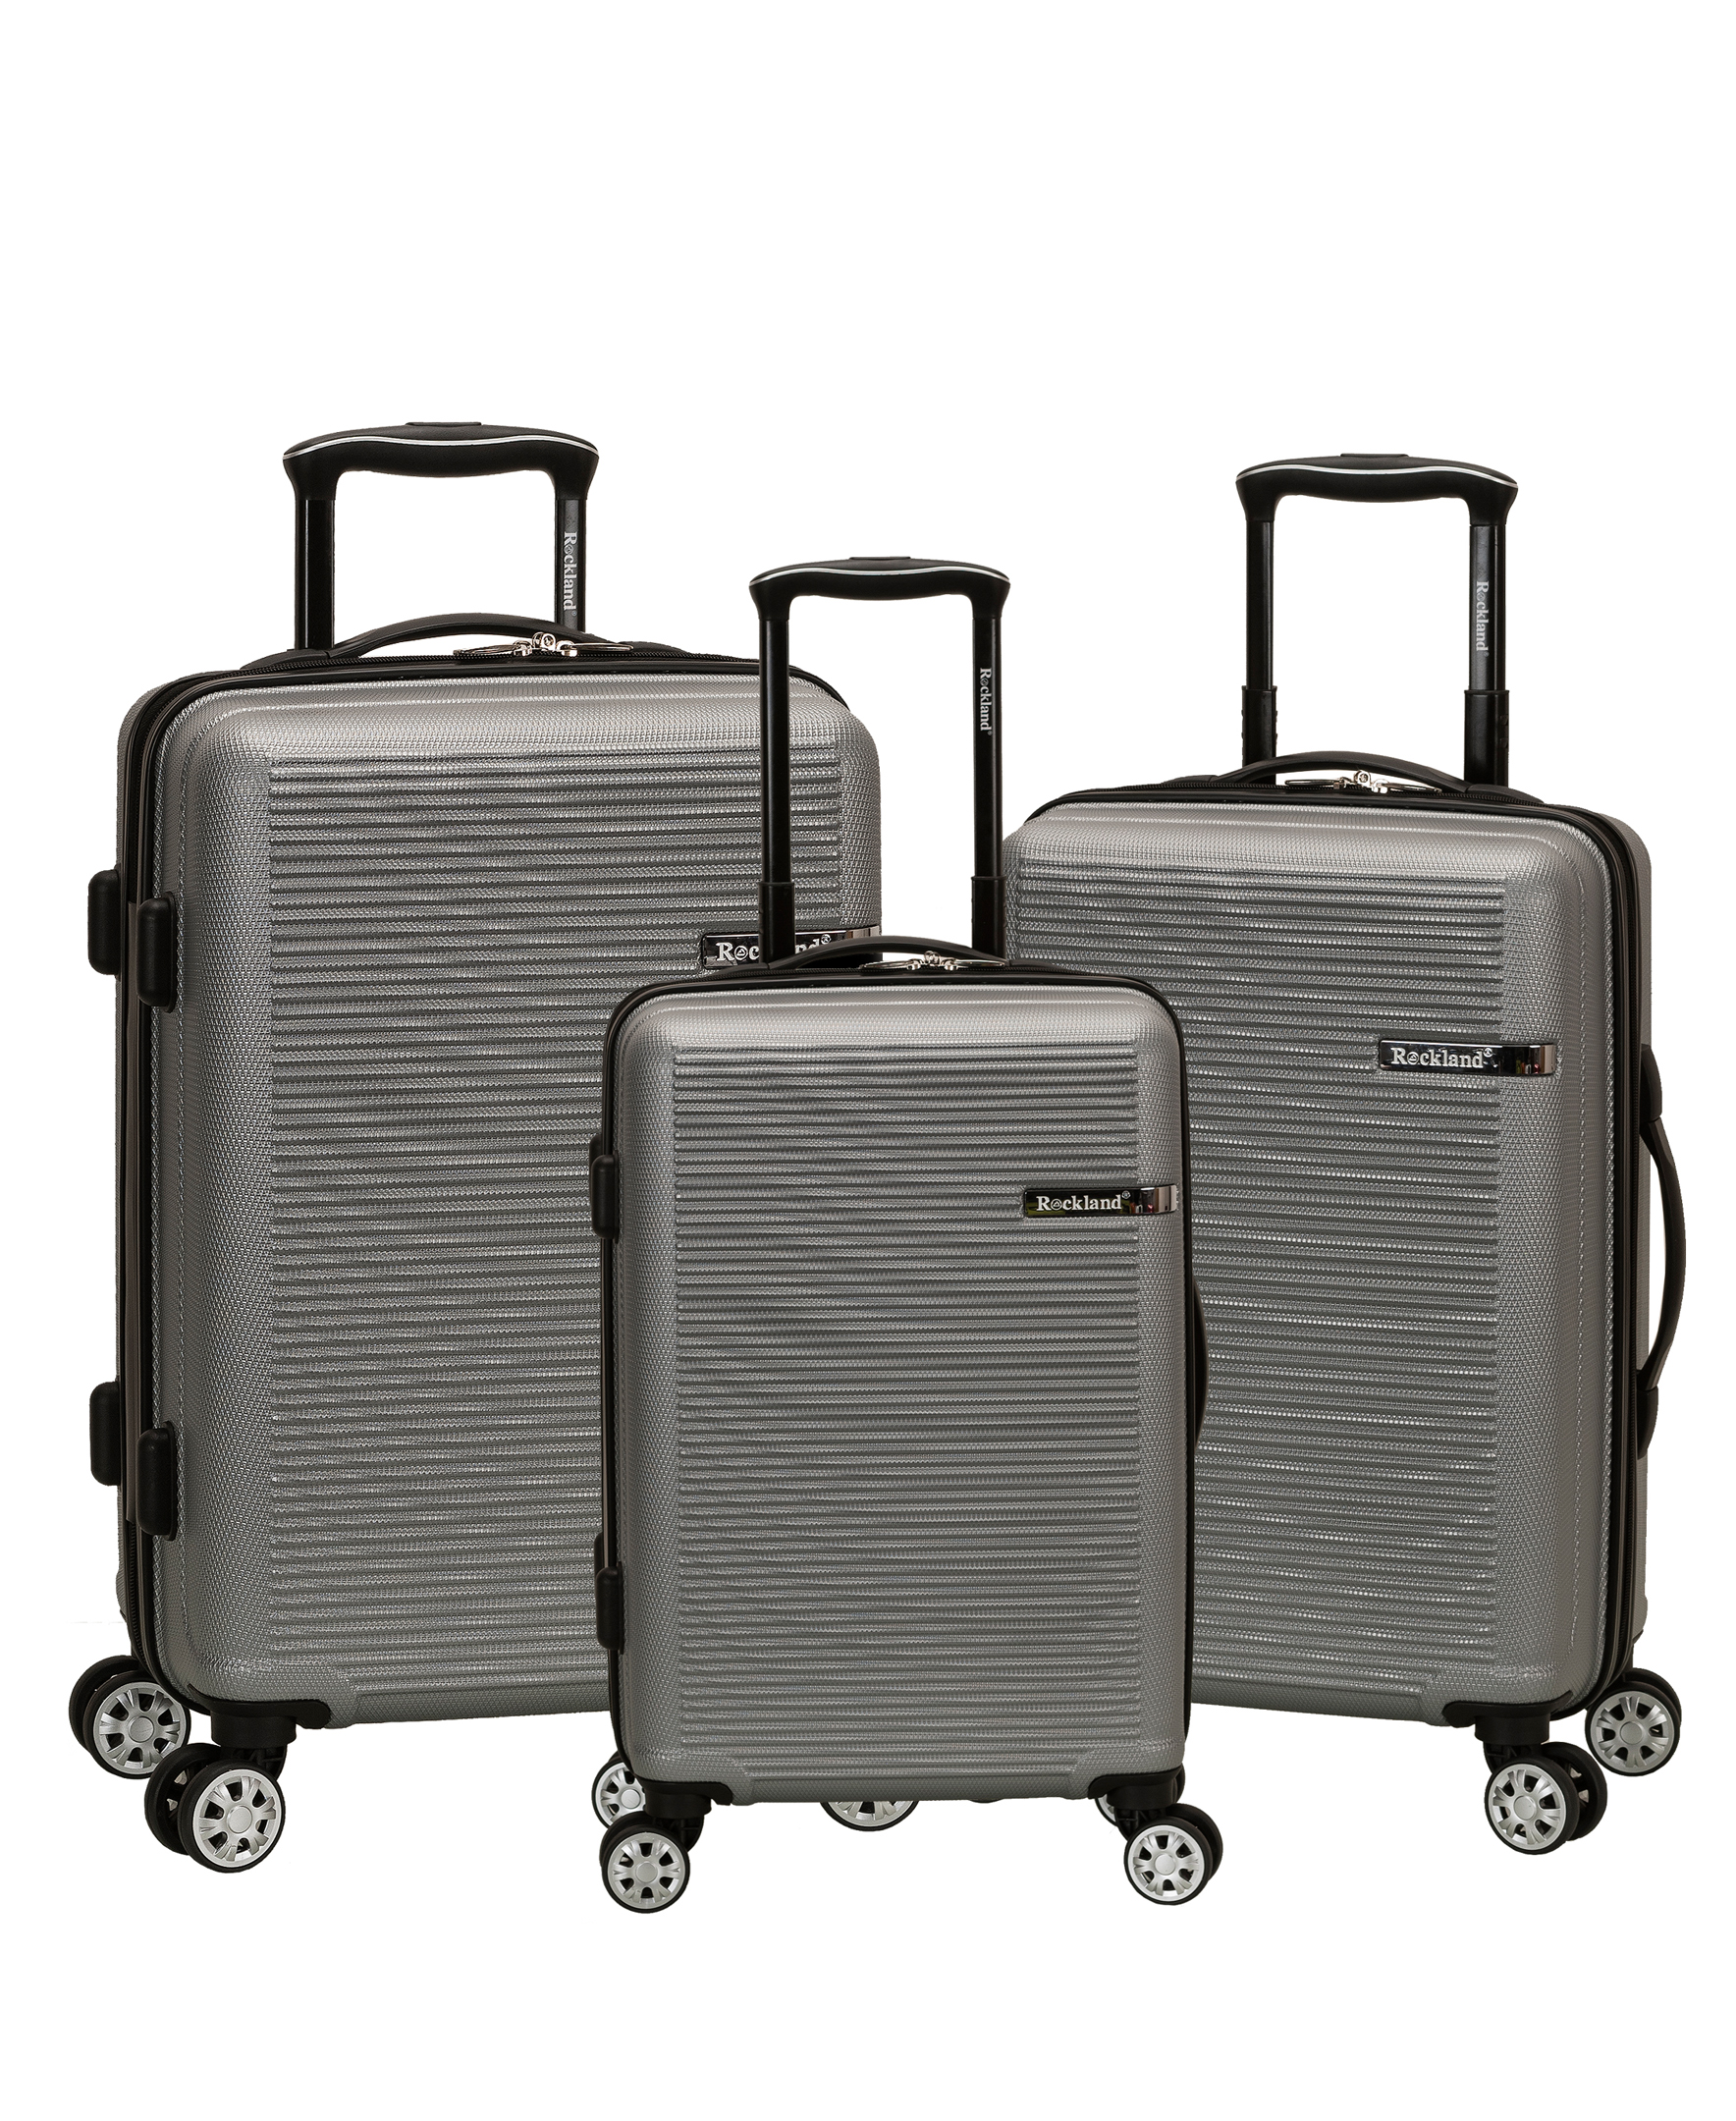 Rockland Luggage Skyline 3 Piece Hardside ABS Non-Expandable Luggage Set, F240 - image 1 of 8